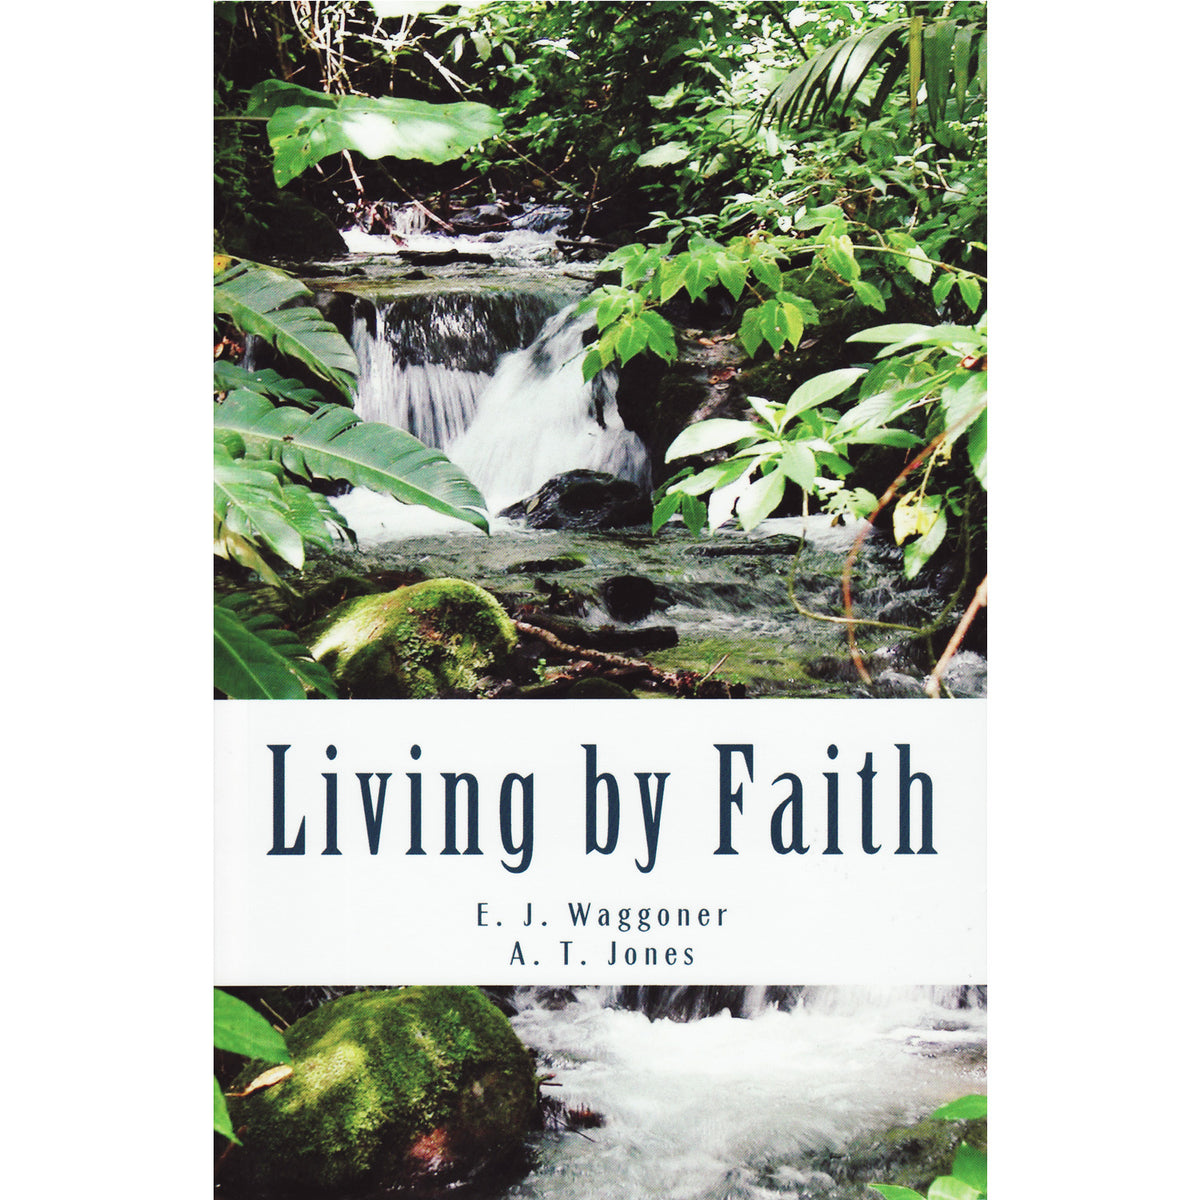 Living by Faith by E.J. Waggoner & A.T. Jones